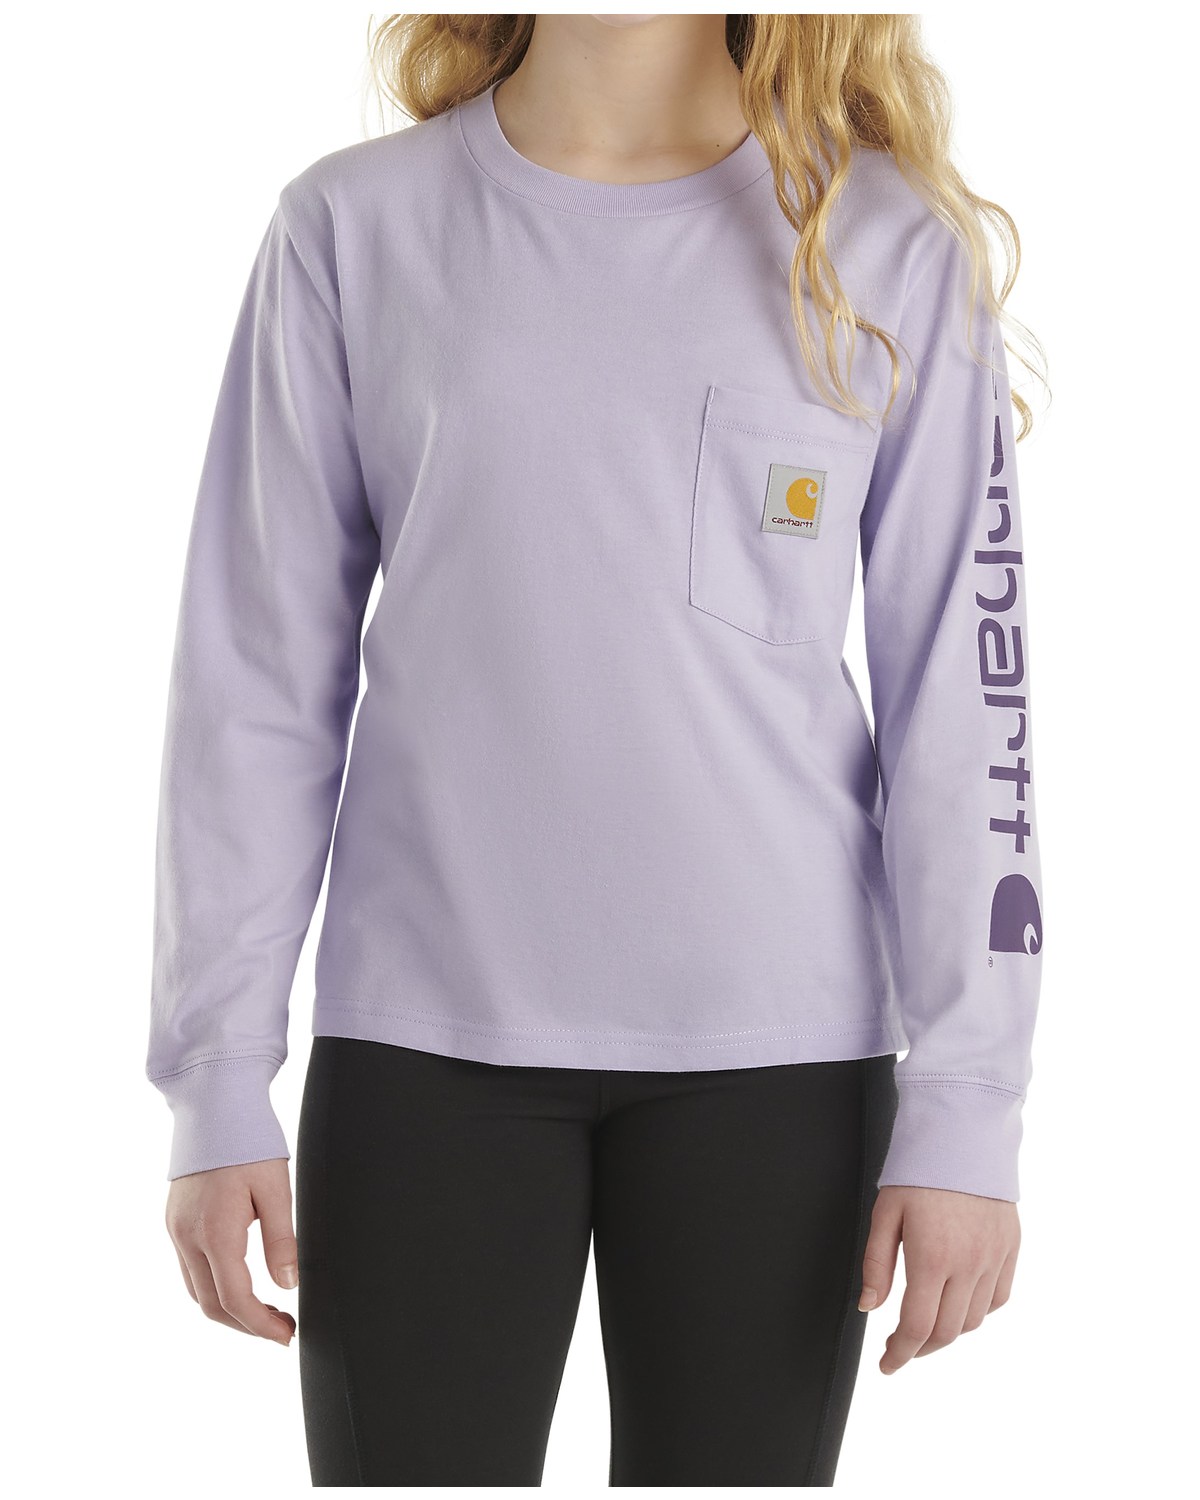 Carhartt Toddler Girls' Logo Pocket Long Sleeve Shirt